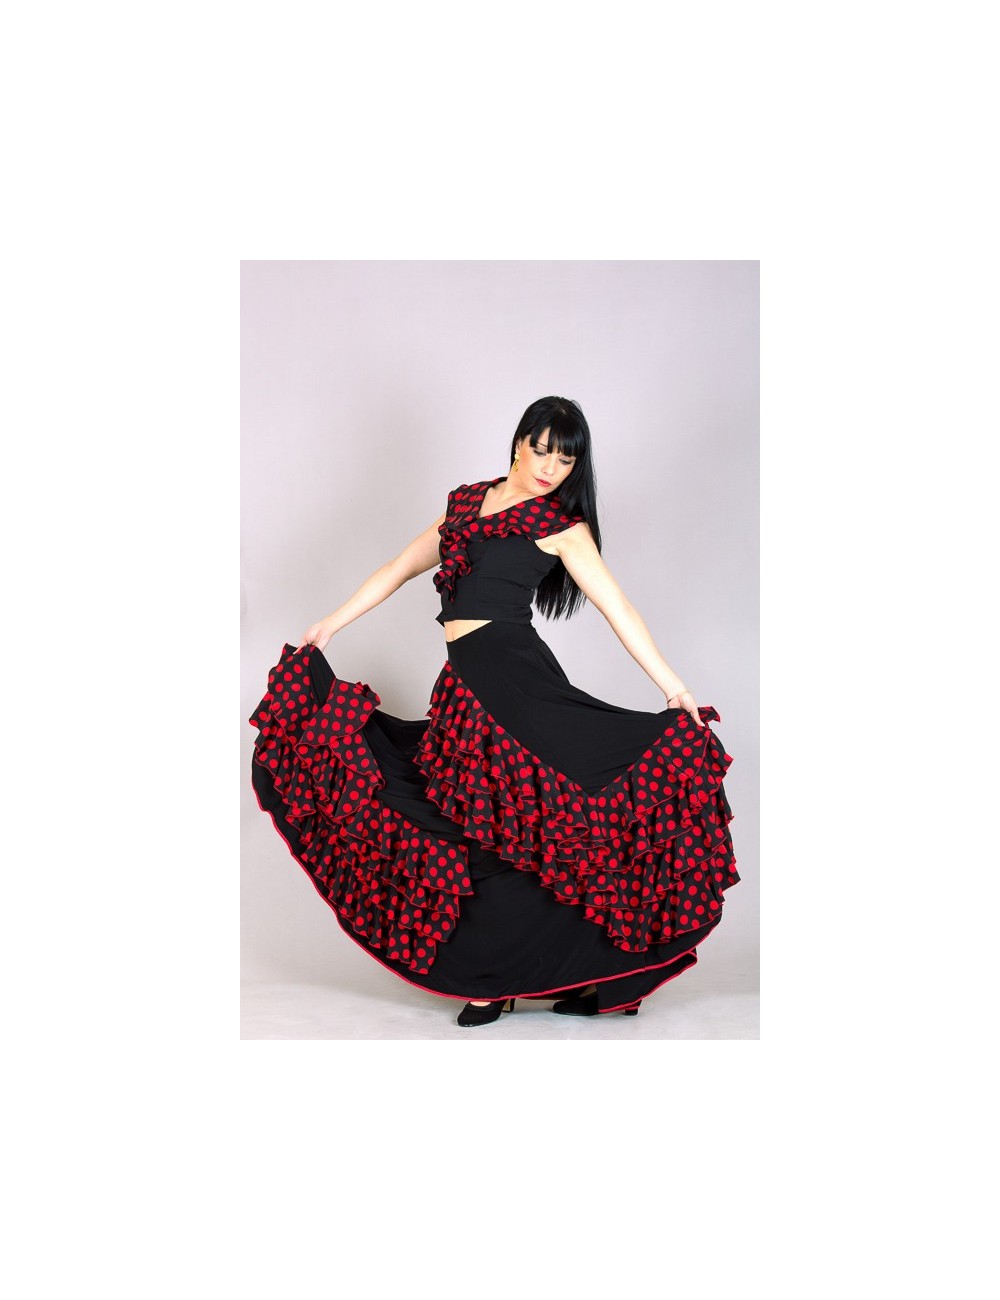 Falda flamenca Sensation